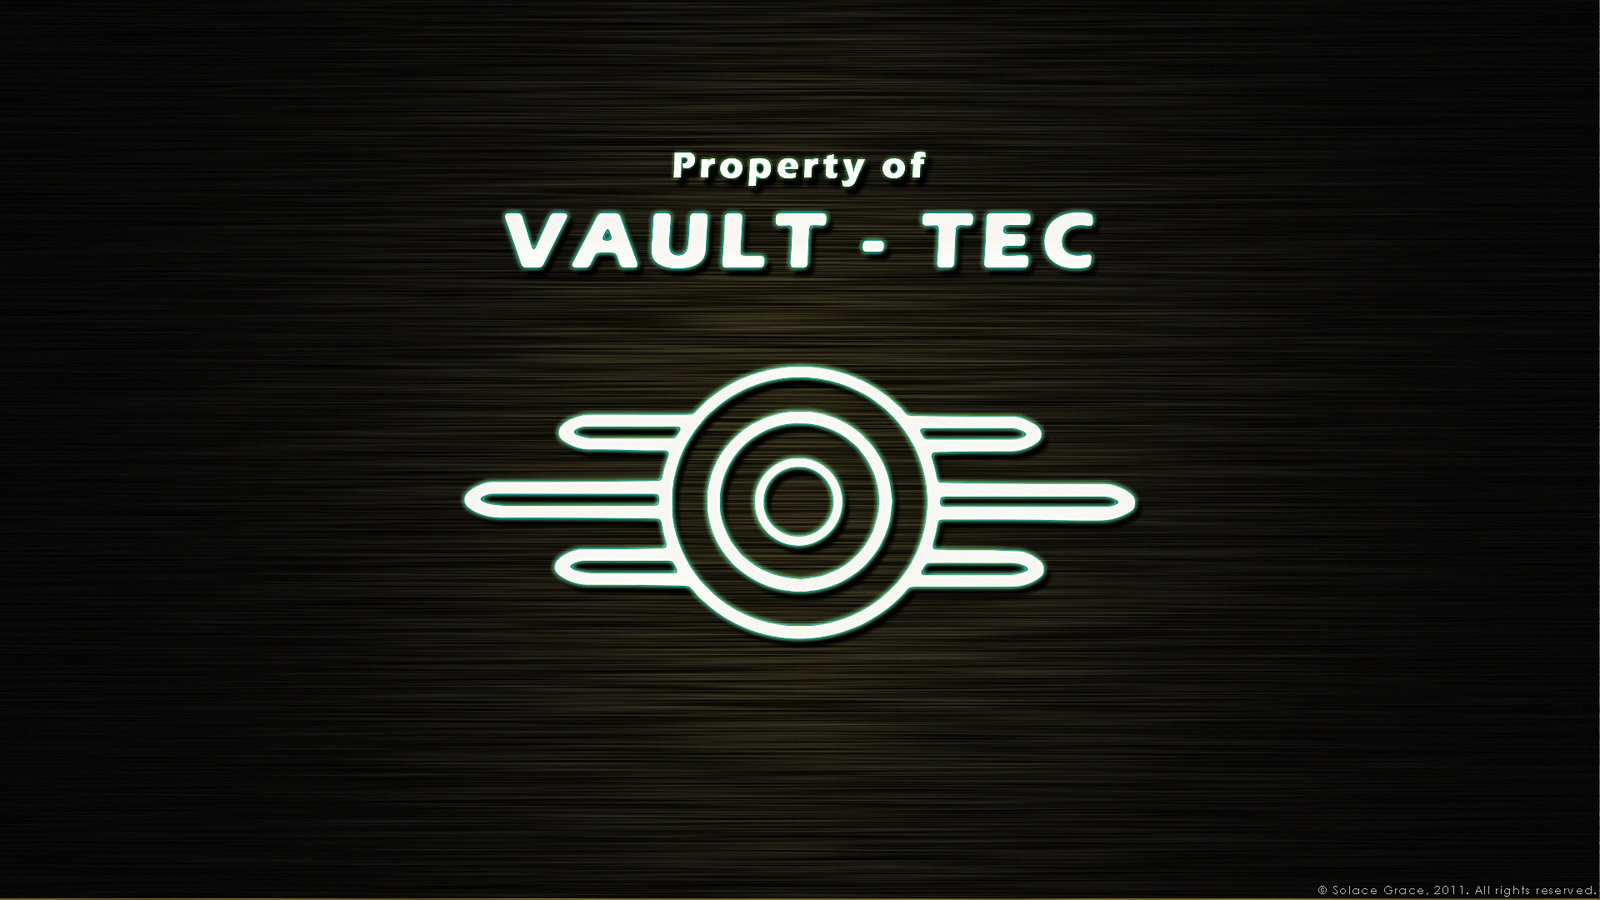  wallpaper hdtv widescreen 1920x1080 wallpaper the vault tec logo